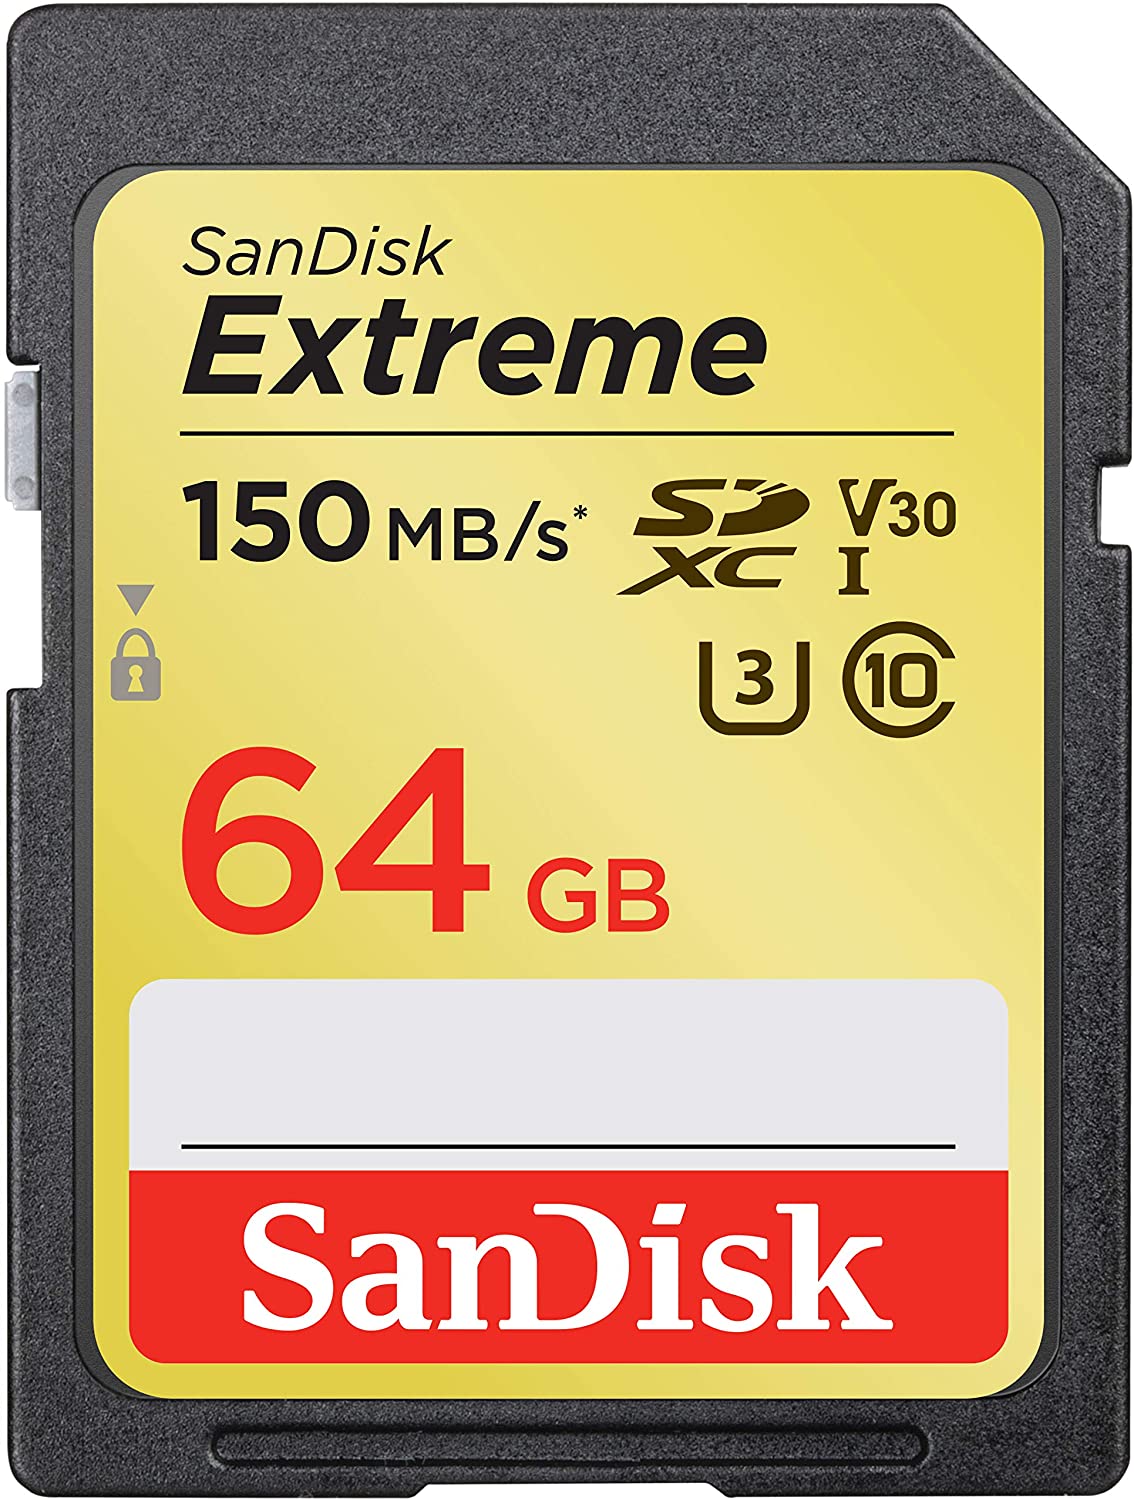 CARTAO 64GB SD 150MB SDXC EXTREME - SANDISK